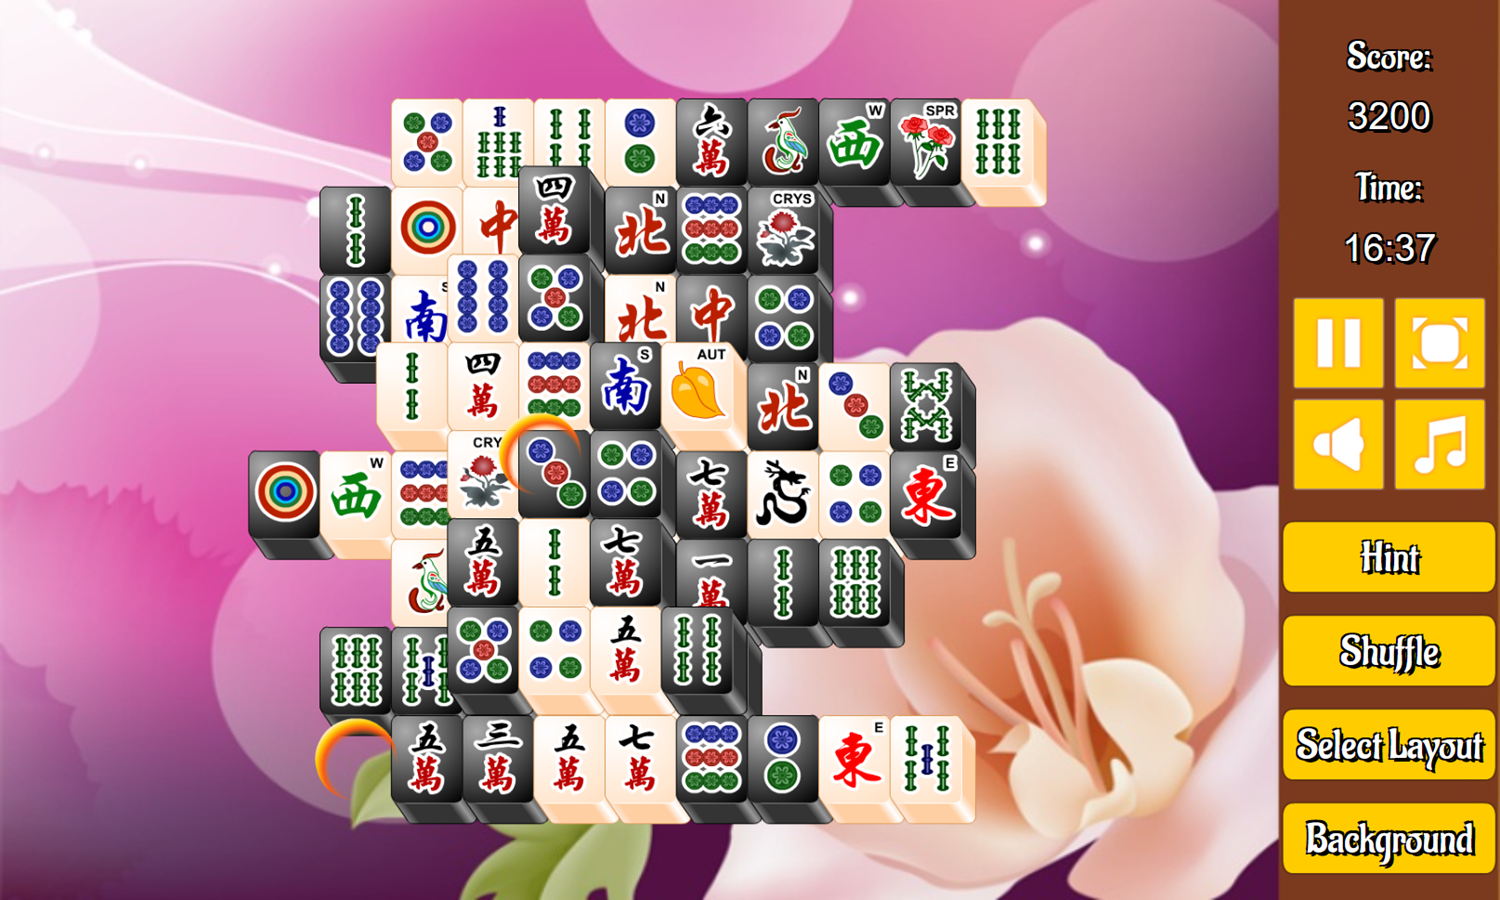 Black and White Mahjong Game Level Play Screenshot.